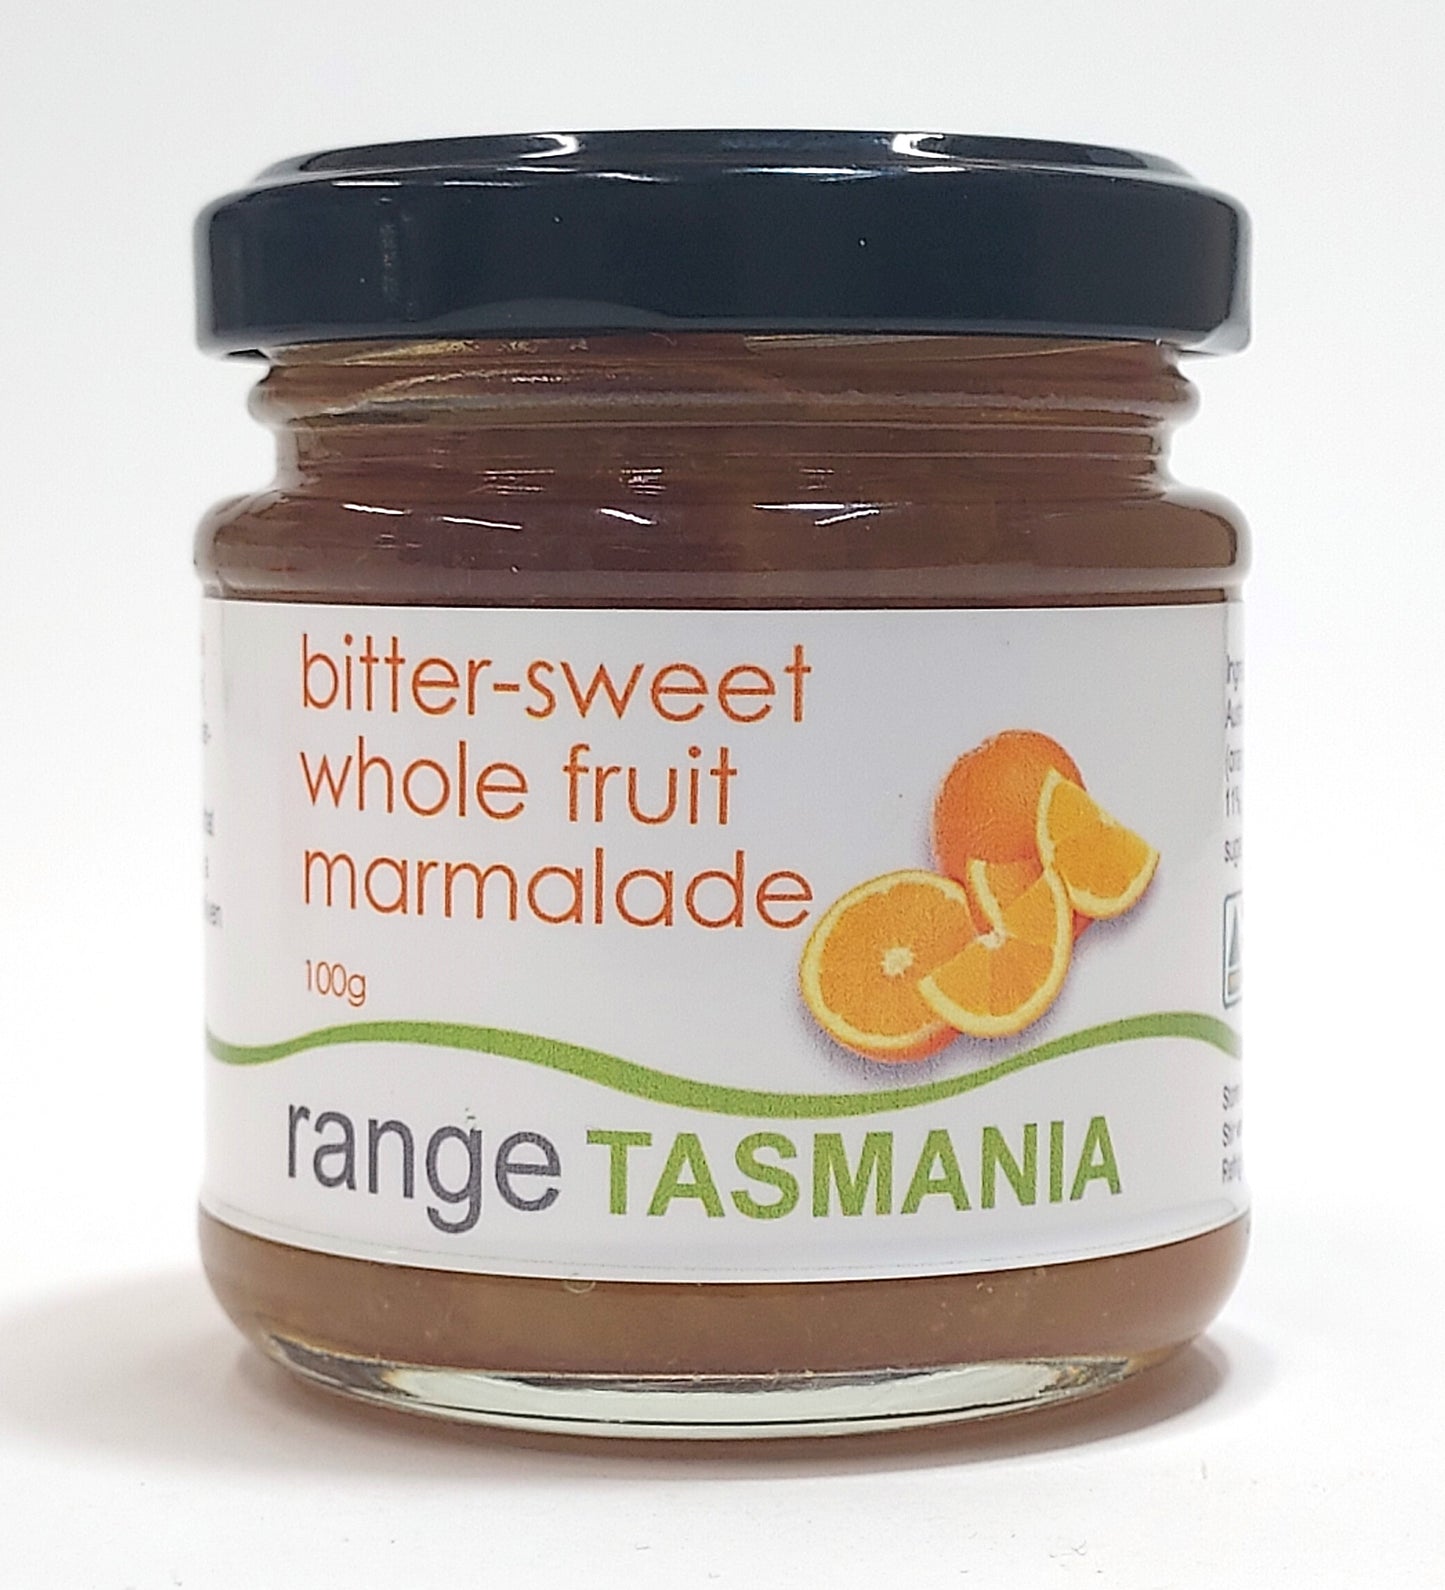 A 100 gram jar of range tasmania bitter-sweet whole fruit marmalade